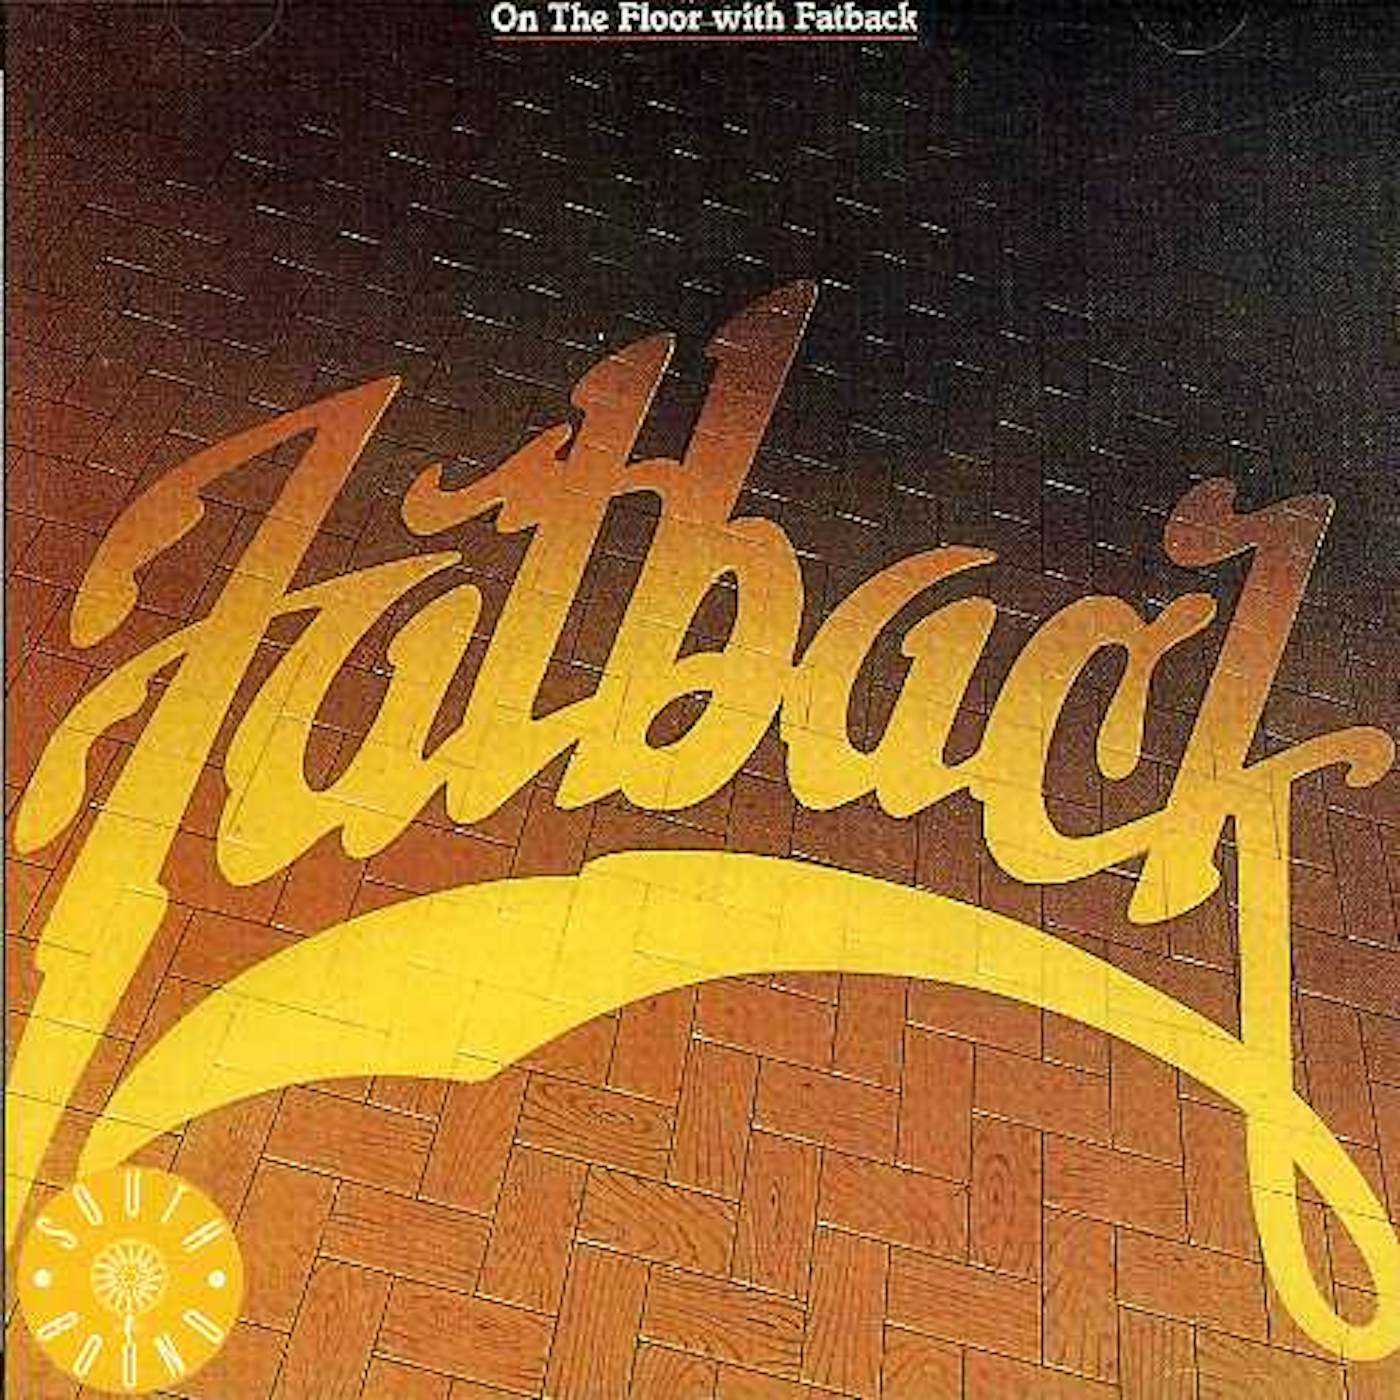 Fatback Band ON THE FLOOR CD